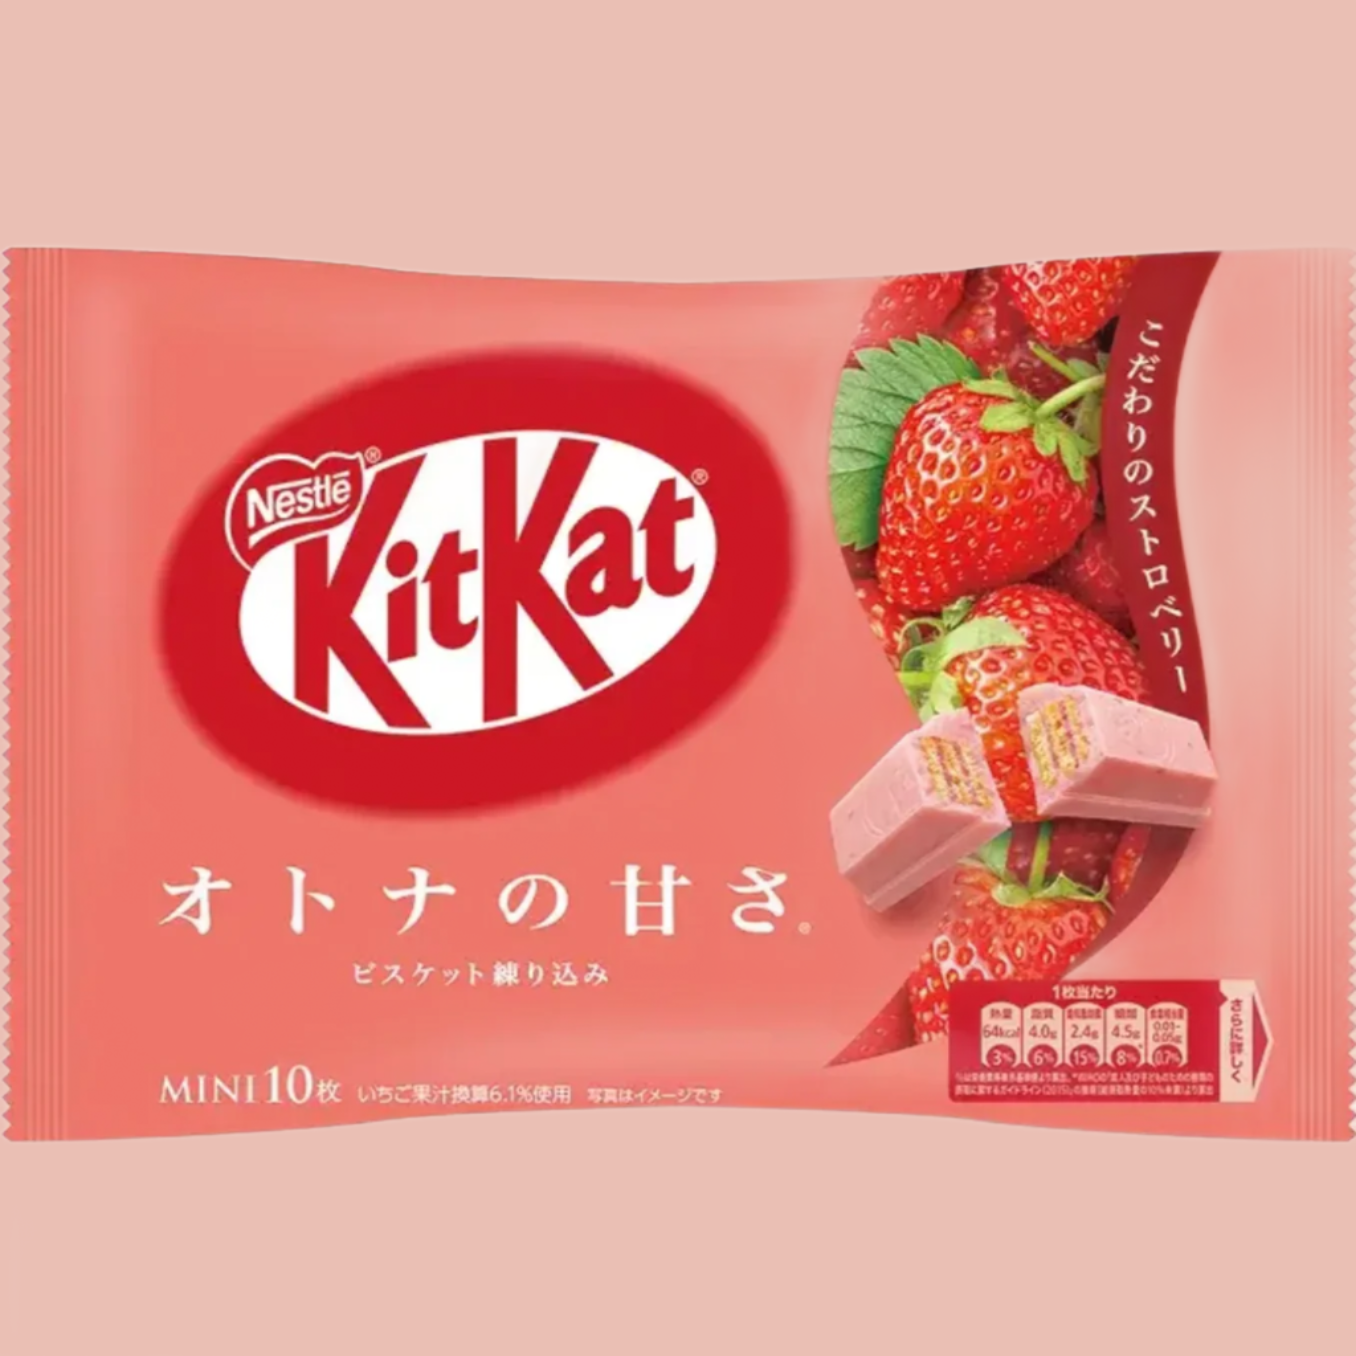 Kit Kat Strawberry Chocolate Wafer 116g (Japan)